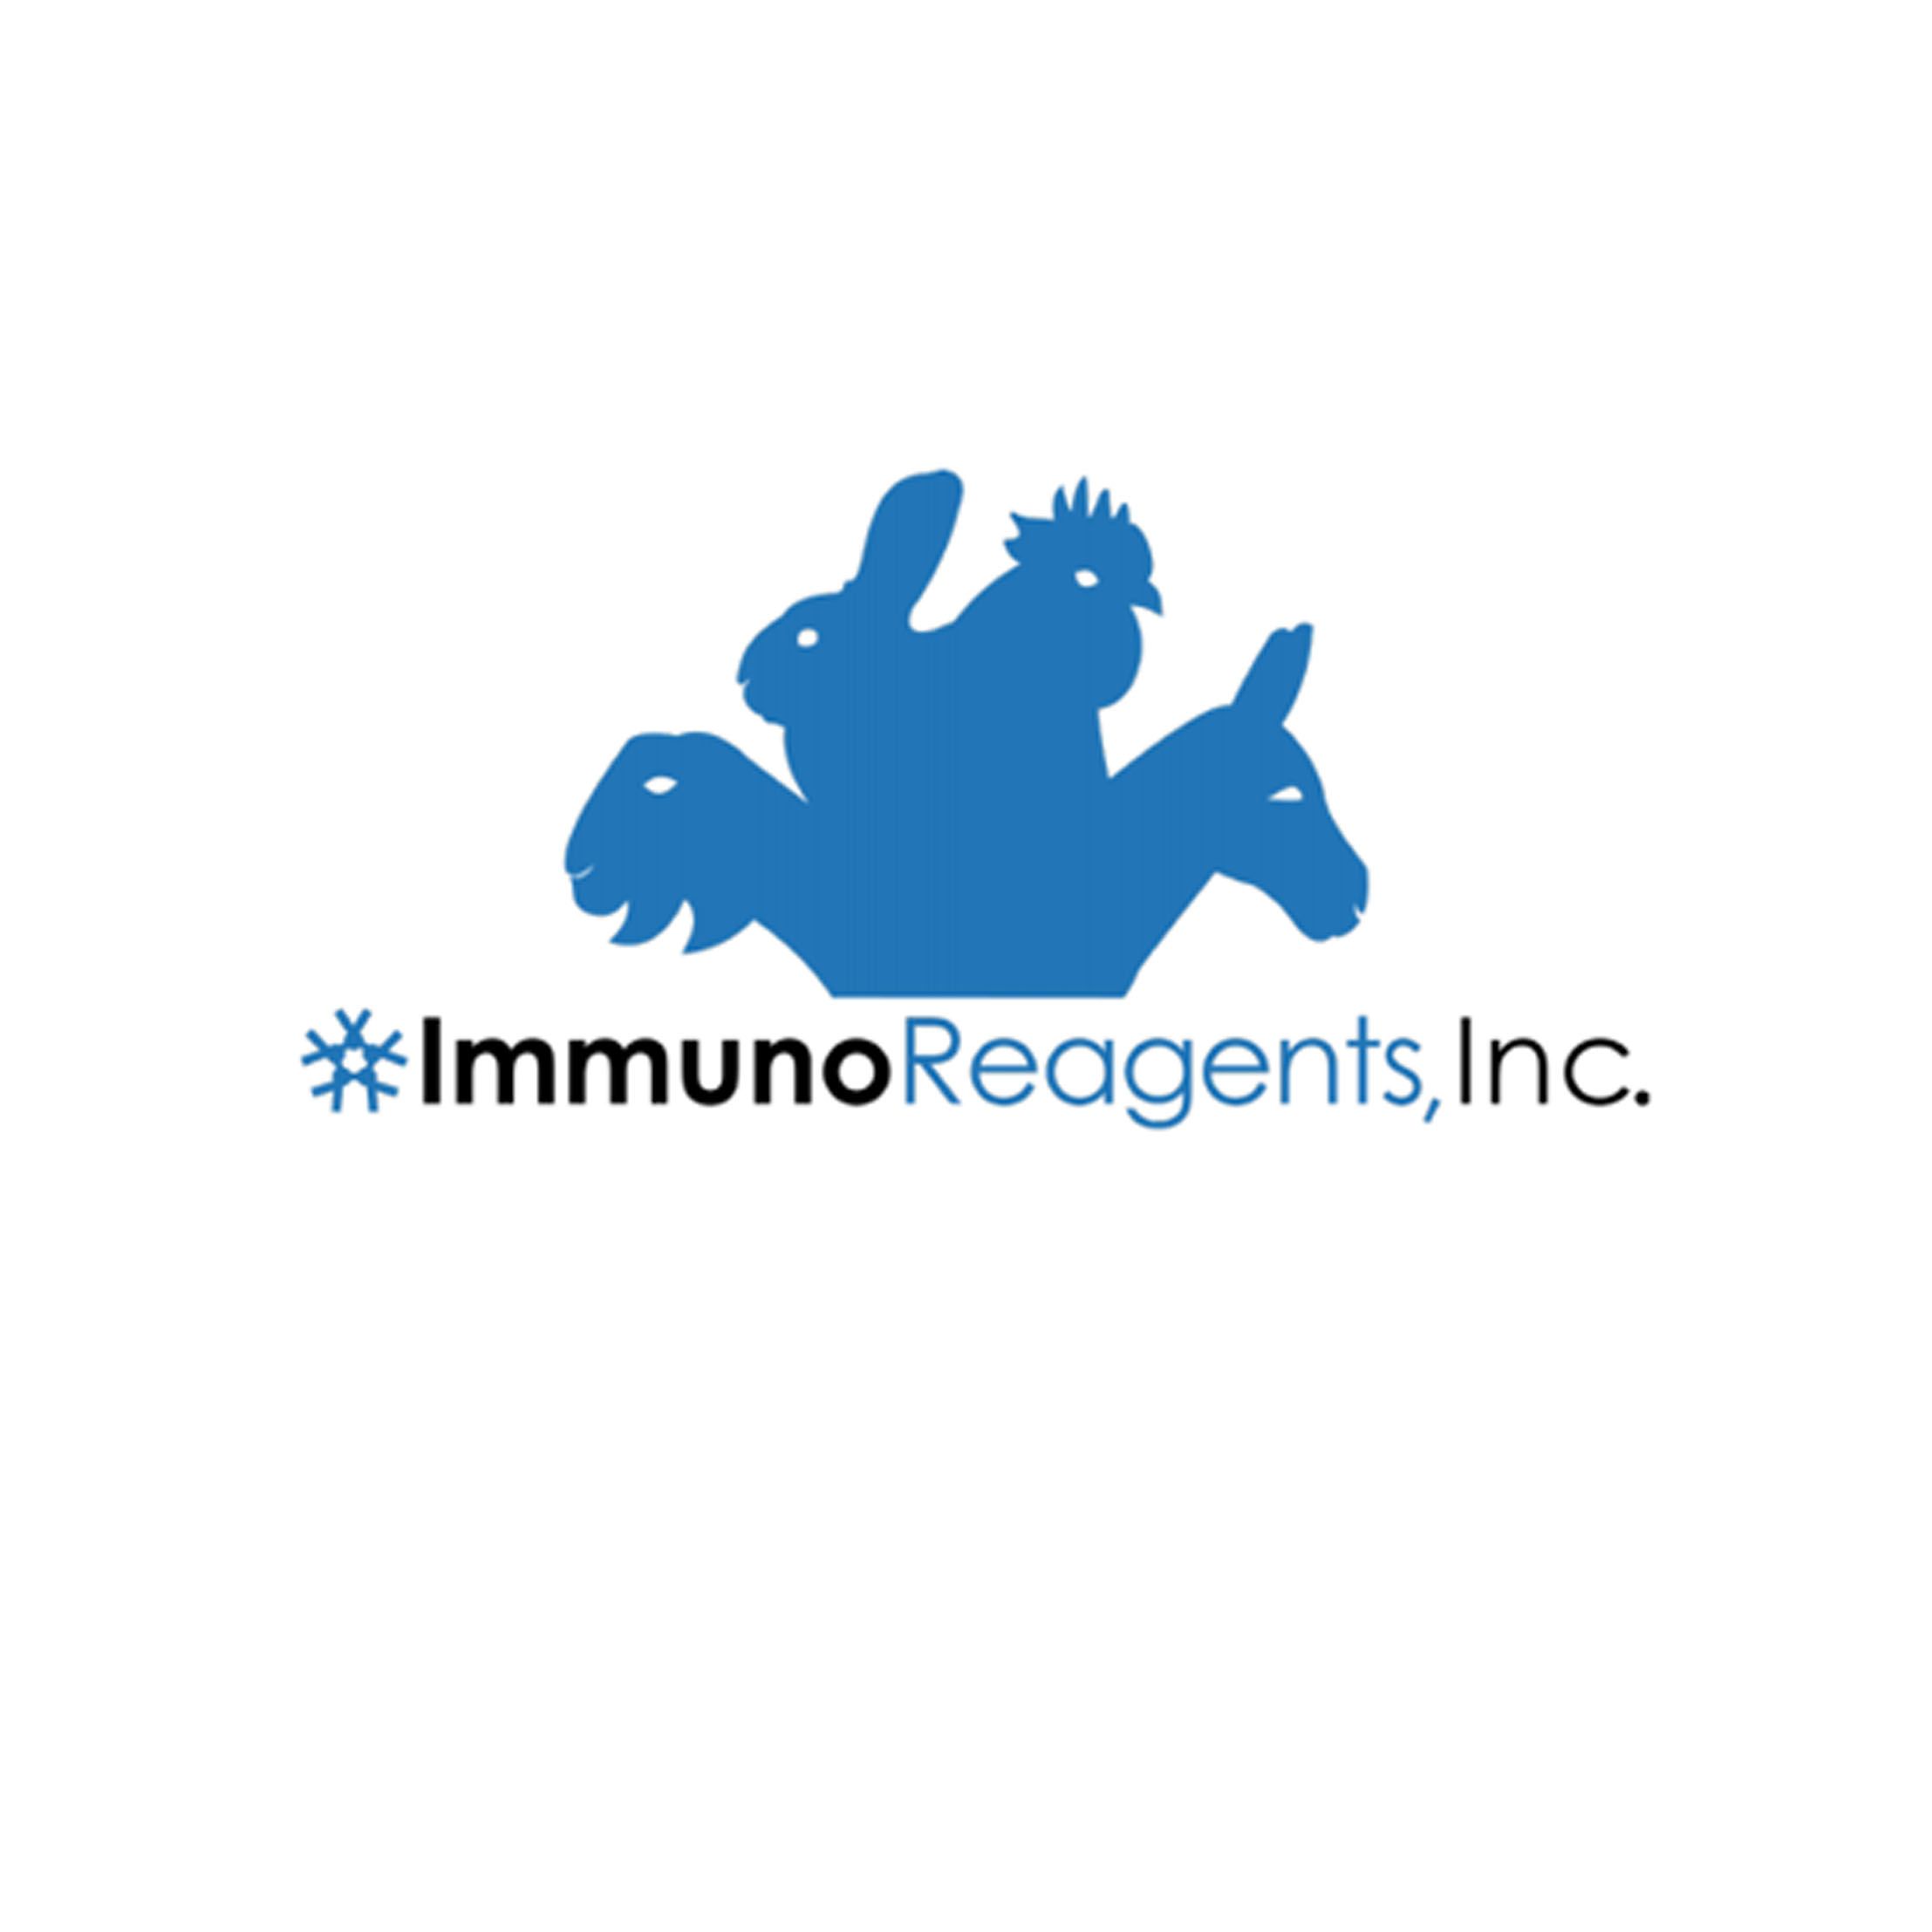 ImmunoReagentsg二抗、Y纯化产品、IgA纯化产品和IgG纯化产品,现货